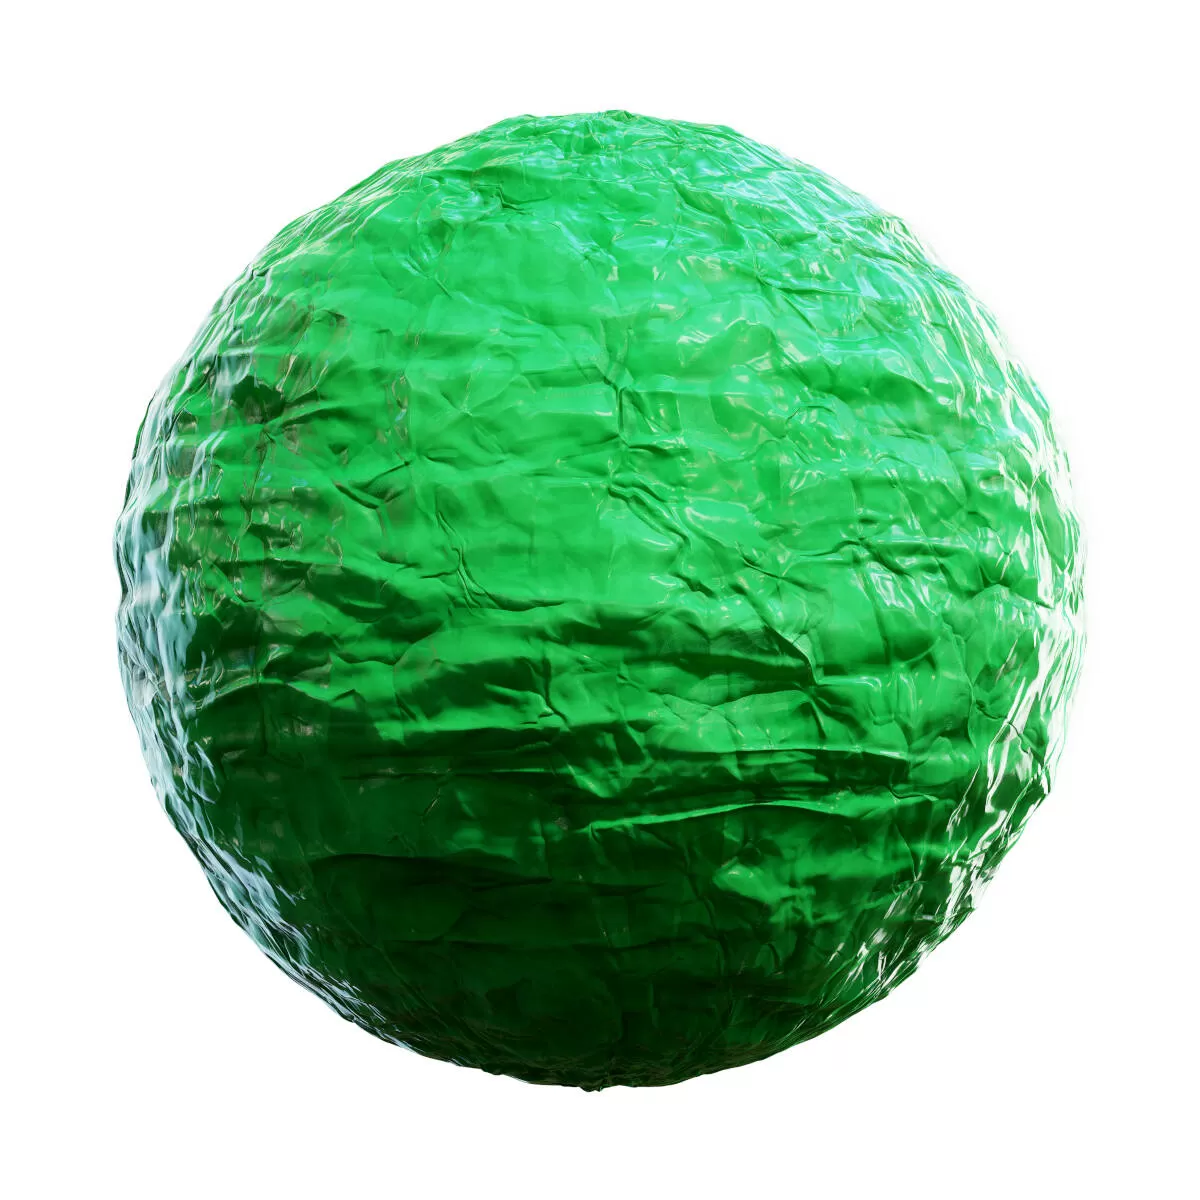 PBR Textures Volume 44 – Plastic – 4K – 8K – green_wrinkled_foil_41_08